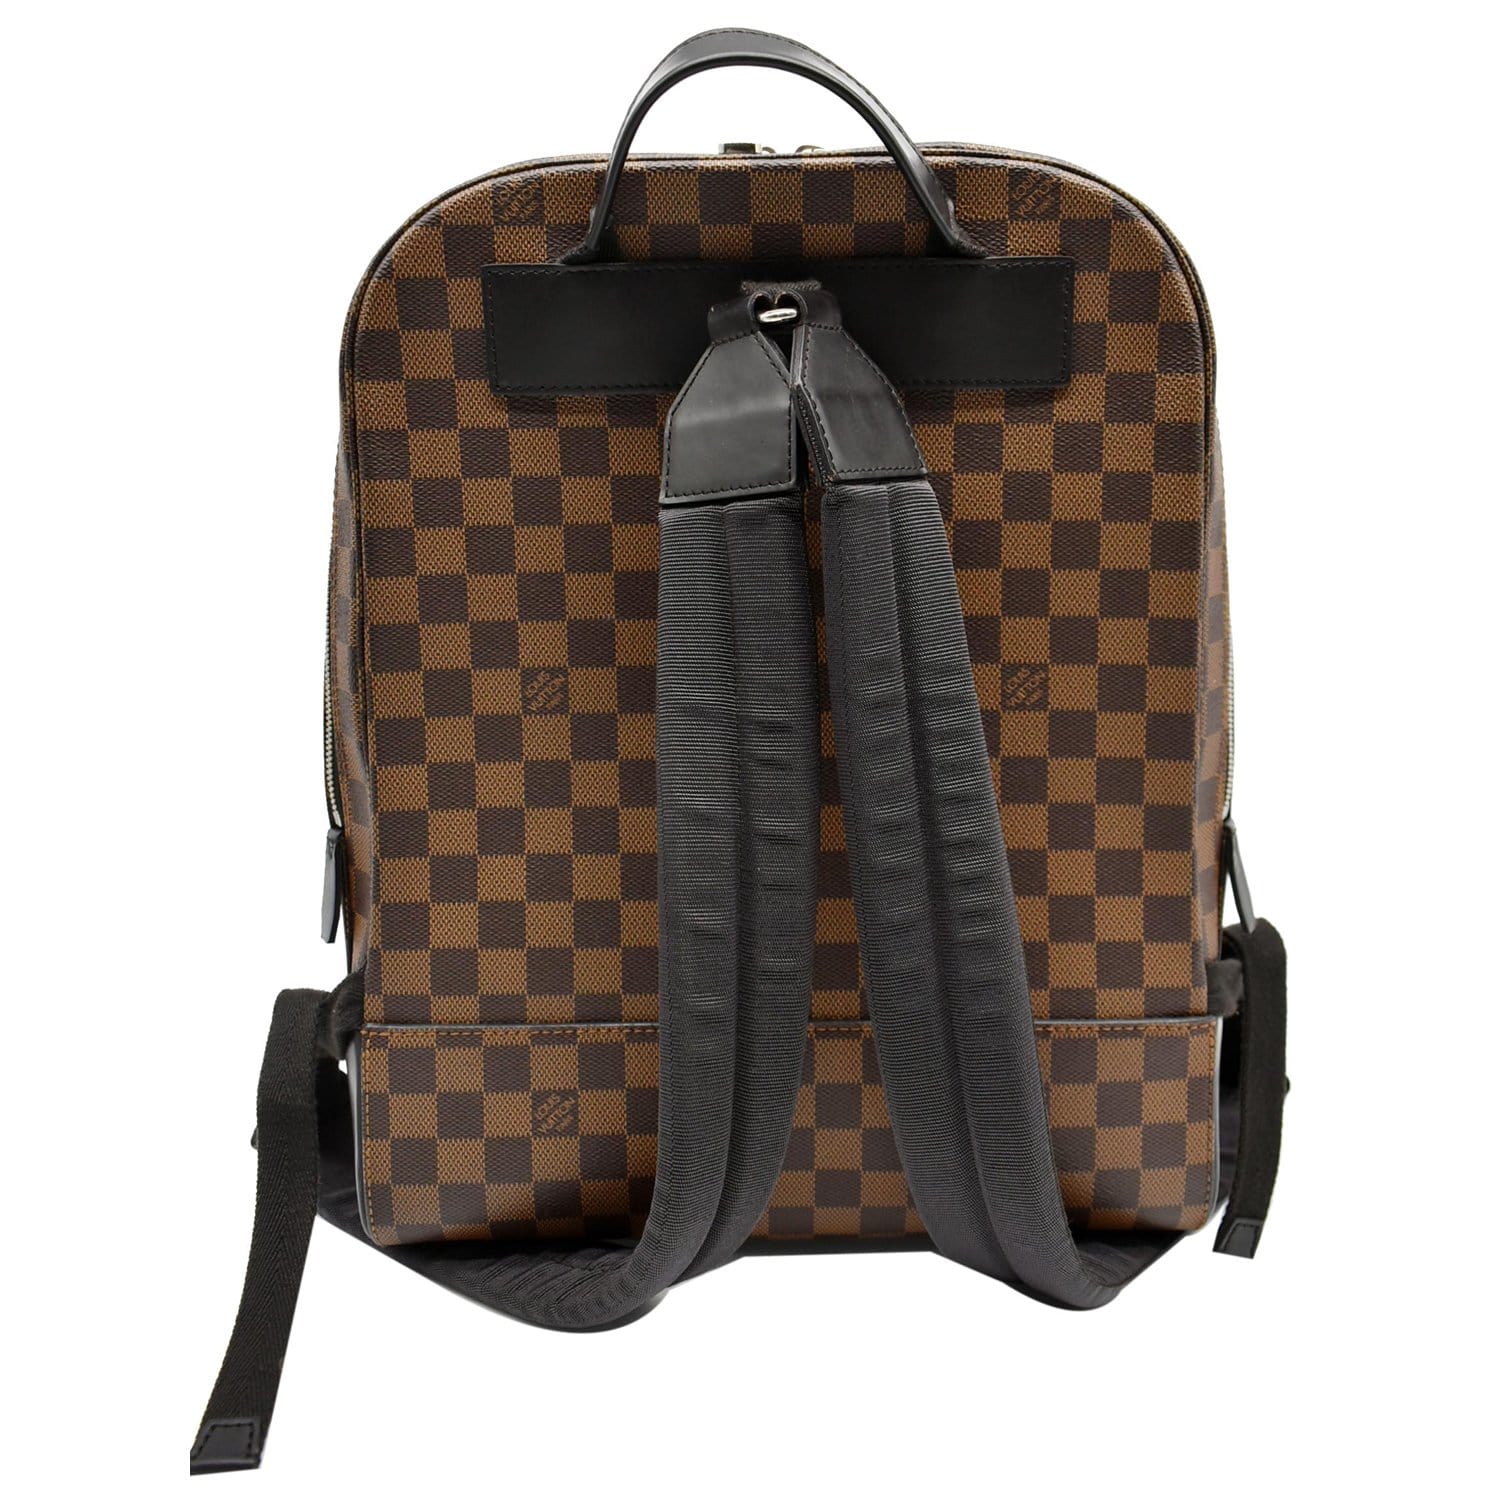 Louis Vuitton sperone backpack Depop jayt1988  Louis vuitton, Handbag  outfit, Louis vuitton backpack